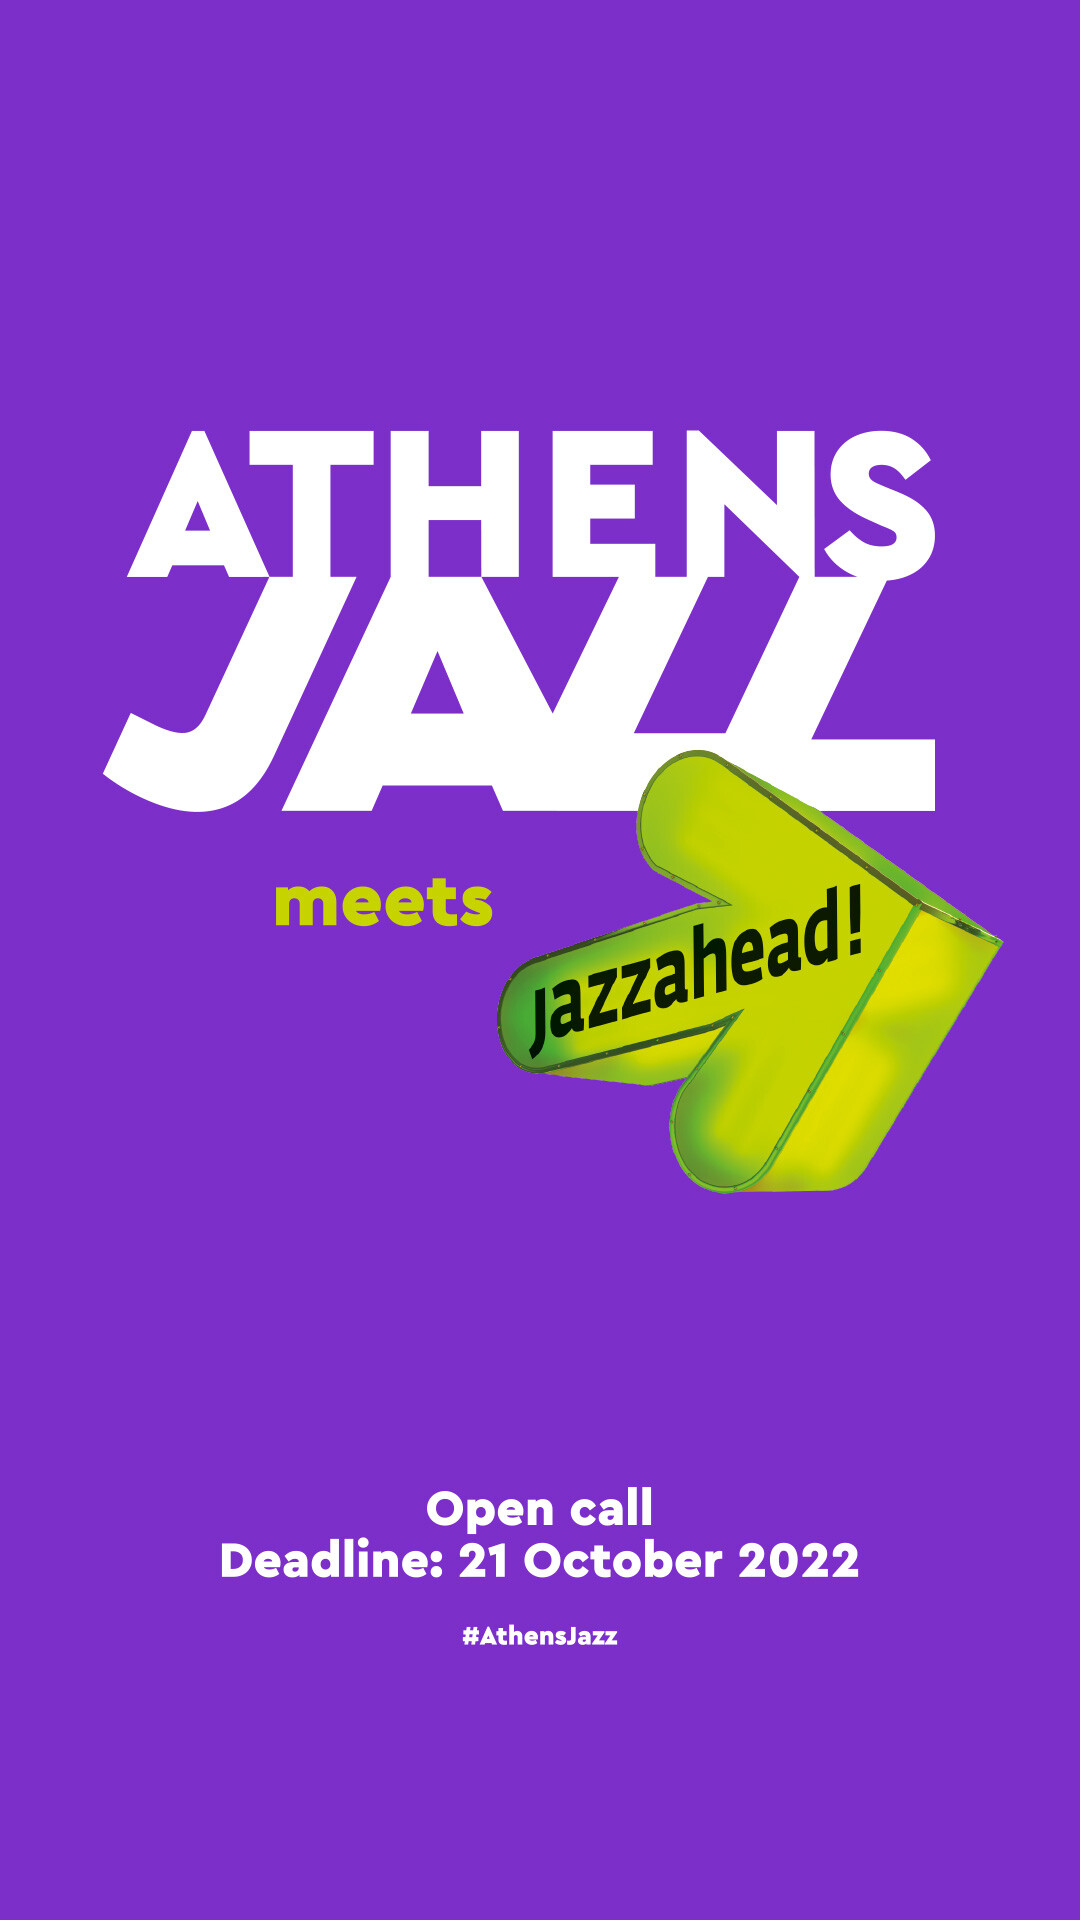 athens-jazz_meetsjazzahead_story